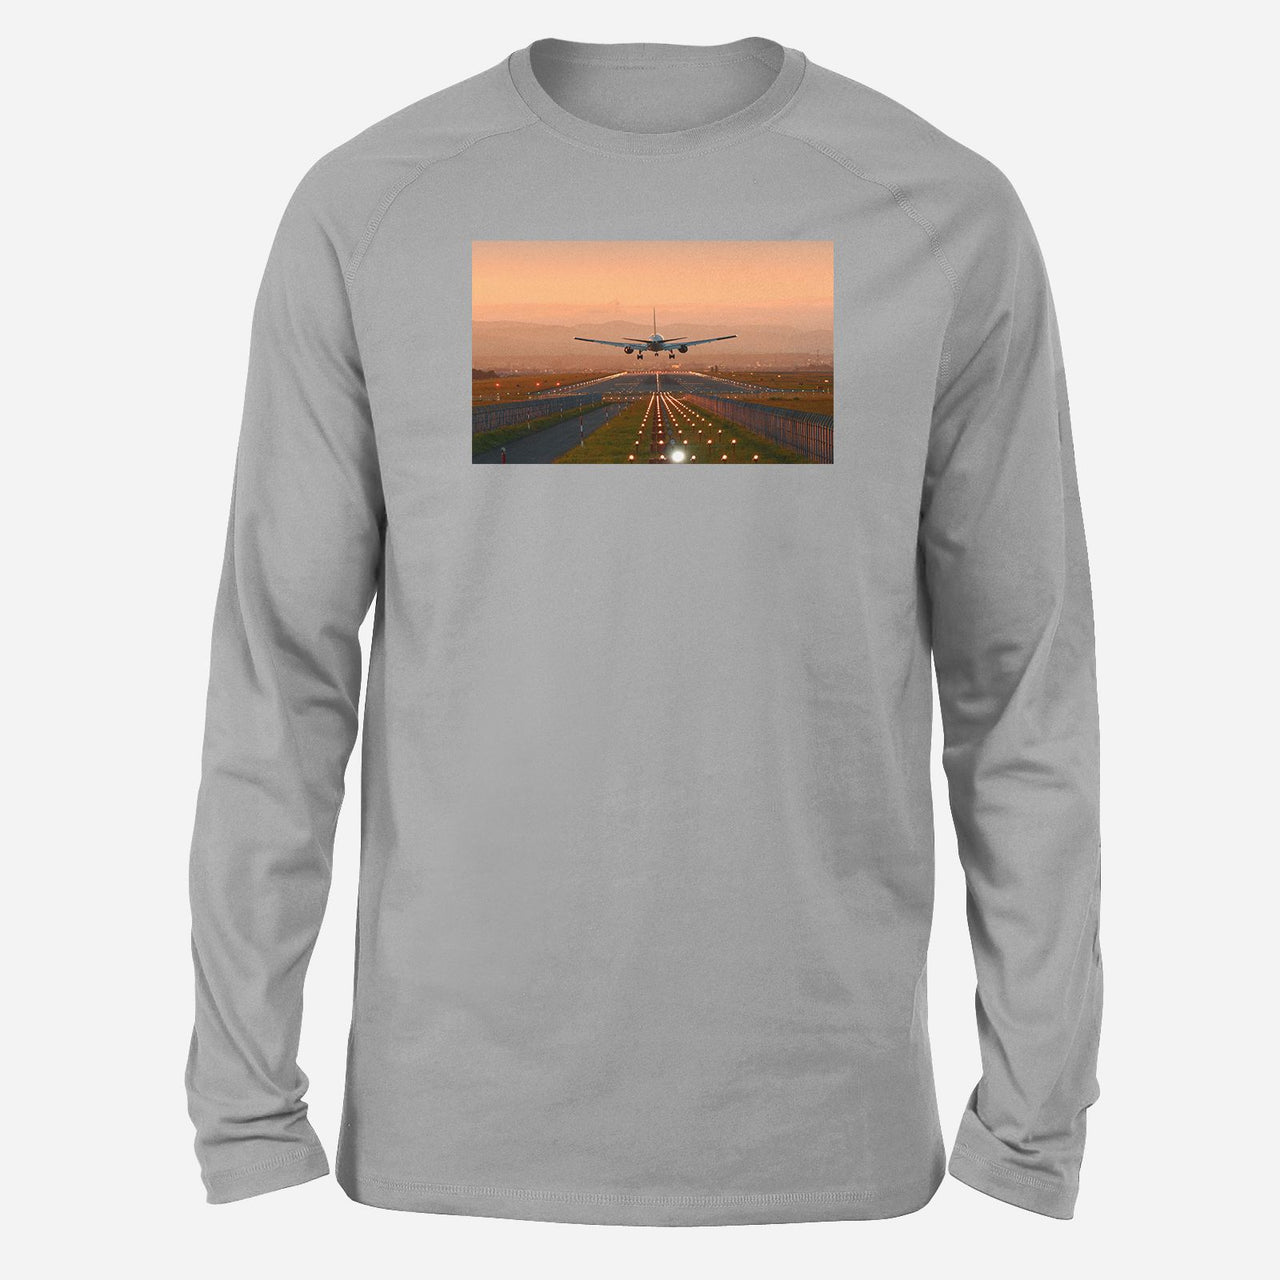 Super Cool Landing During Sunset Designed Long-Sleeve T-Shirts